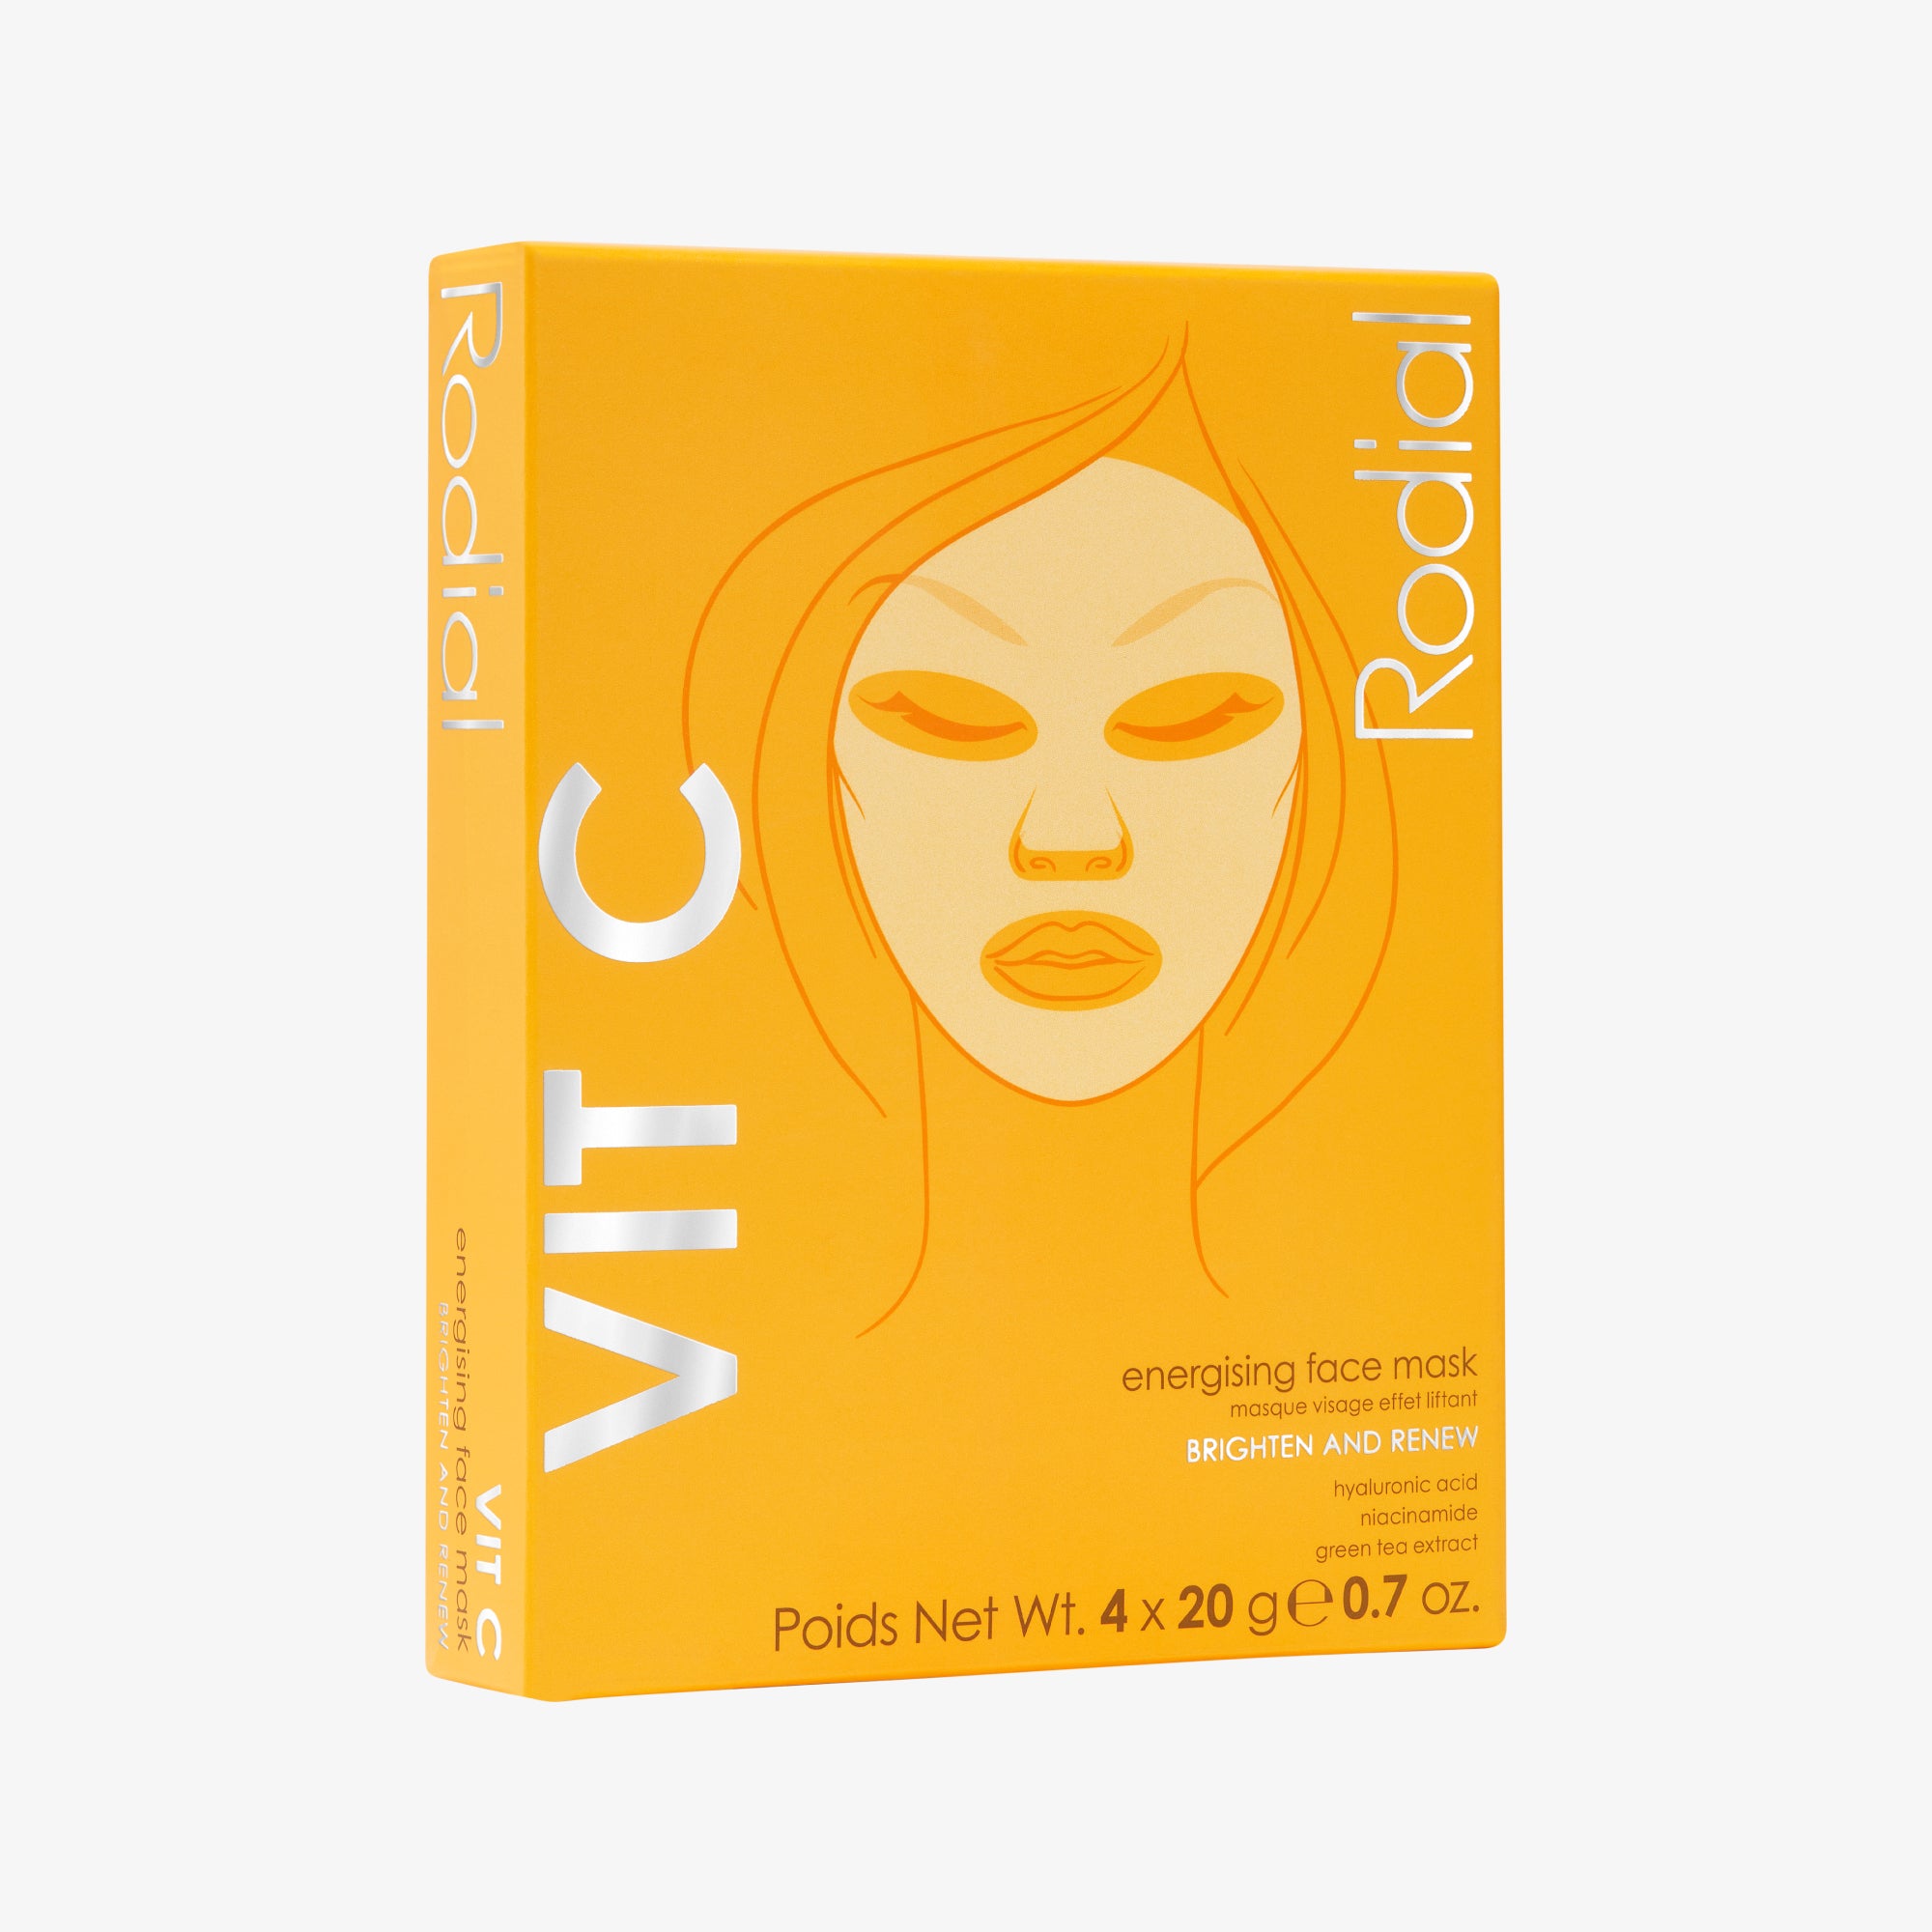 Vit C Energising Sheet Masks (Box of 4)